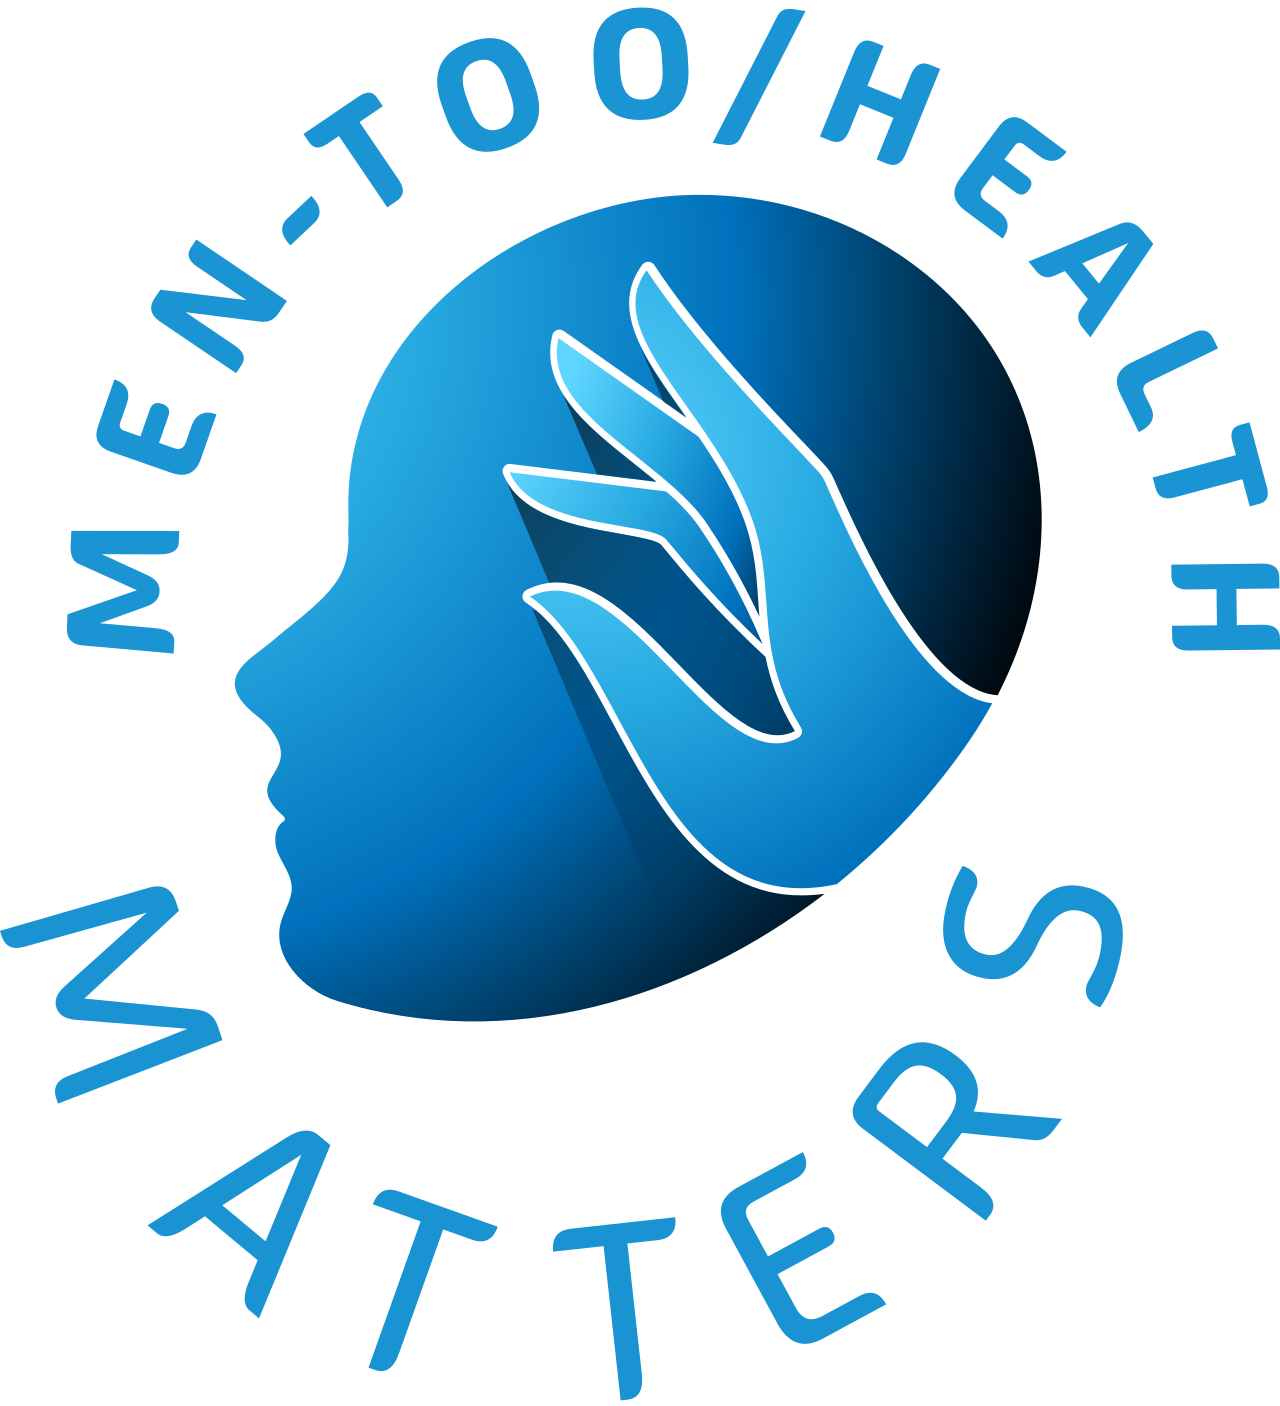 MEN-TOO/HEALTH's logo